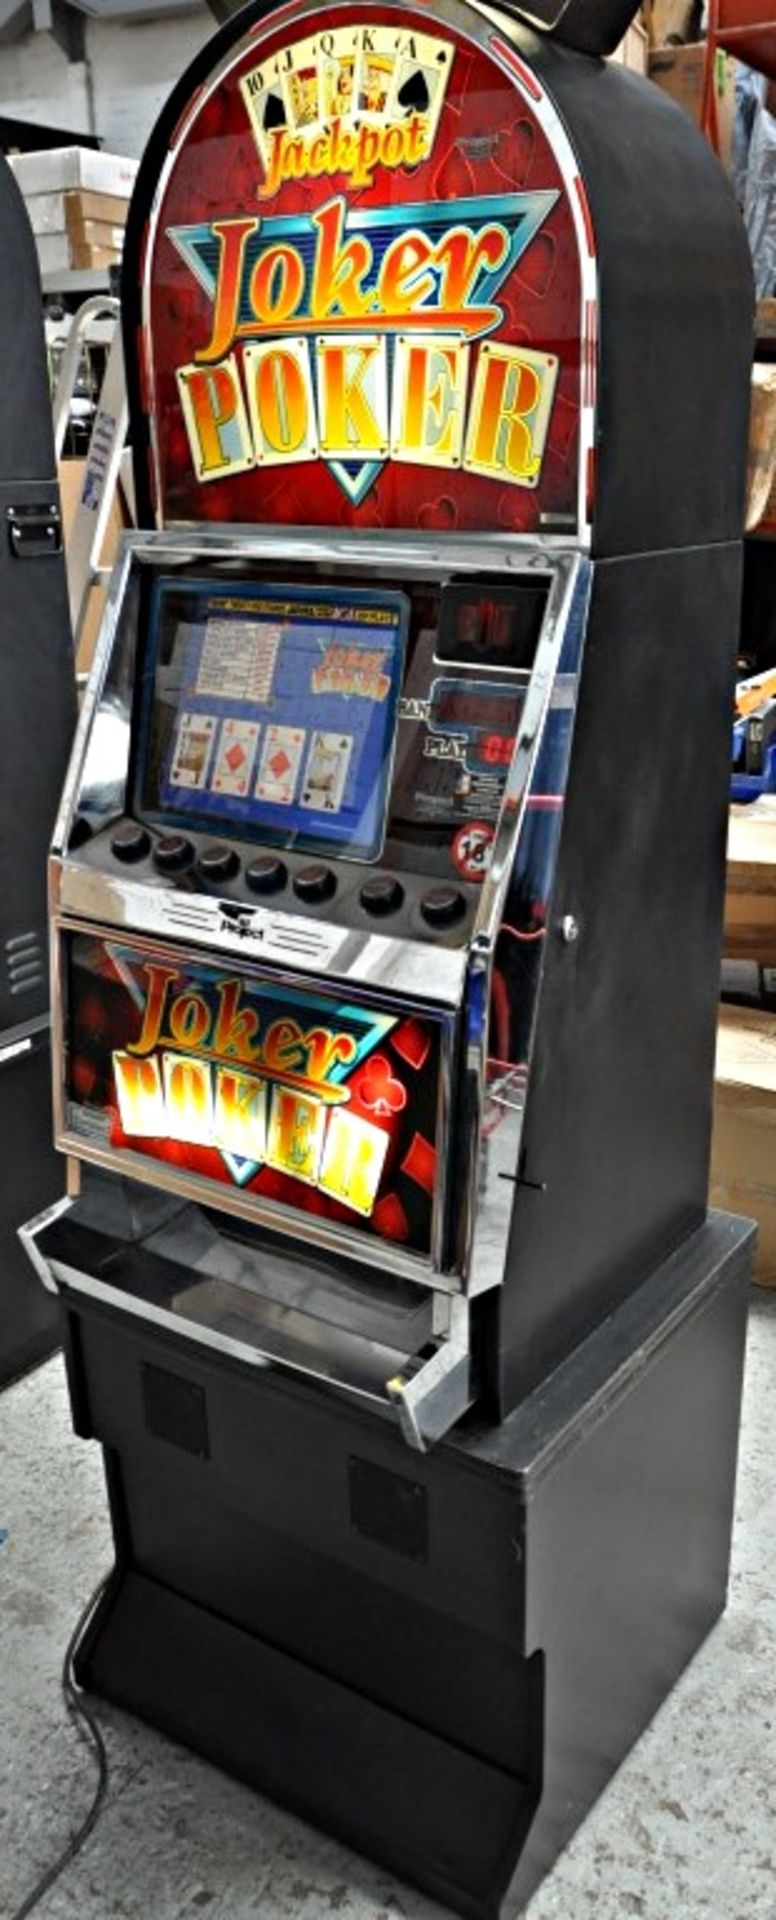 1 x "JACKPOT JOKER POKER" Arcade Fruit Machine - Manufacturer: Project - Pre-Owned In Good Working